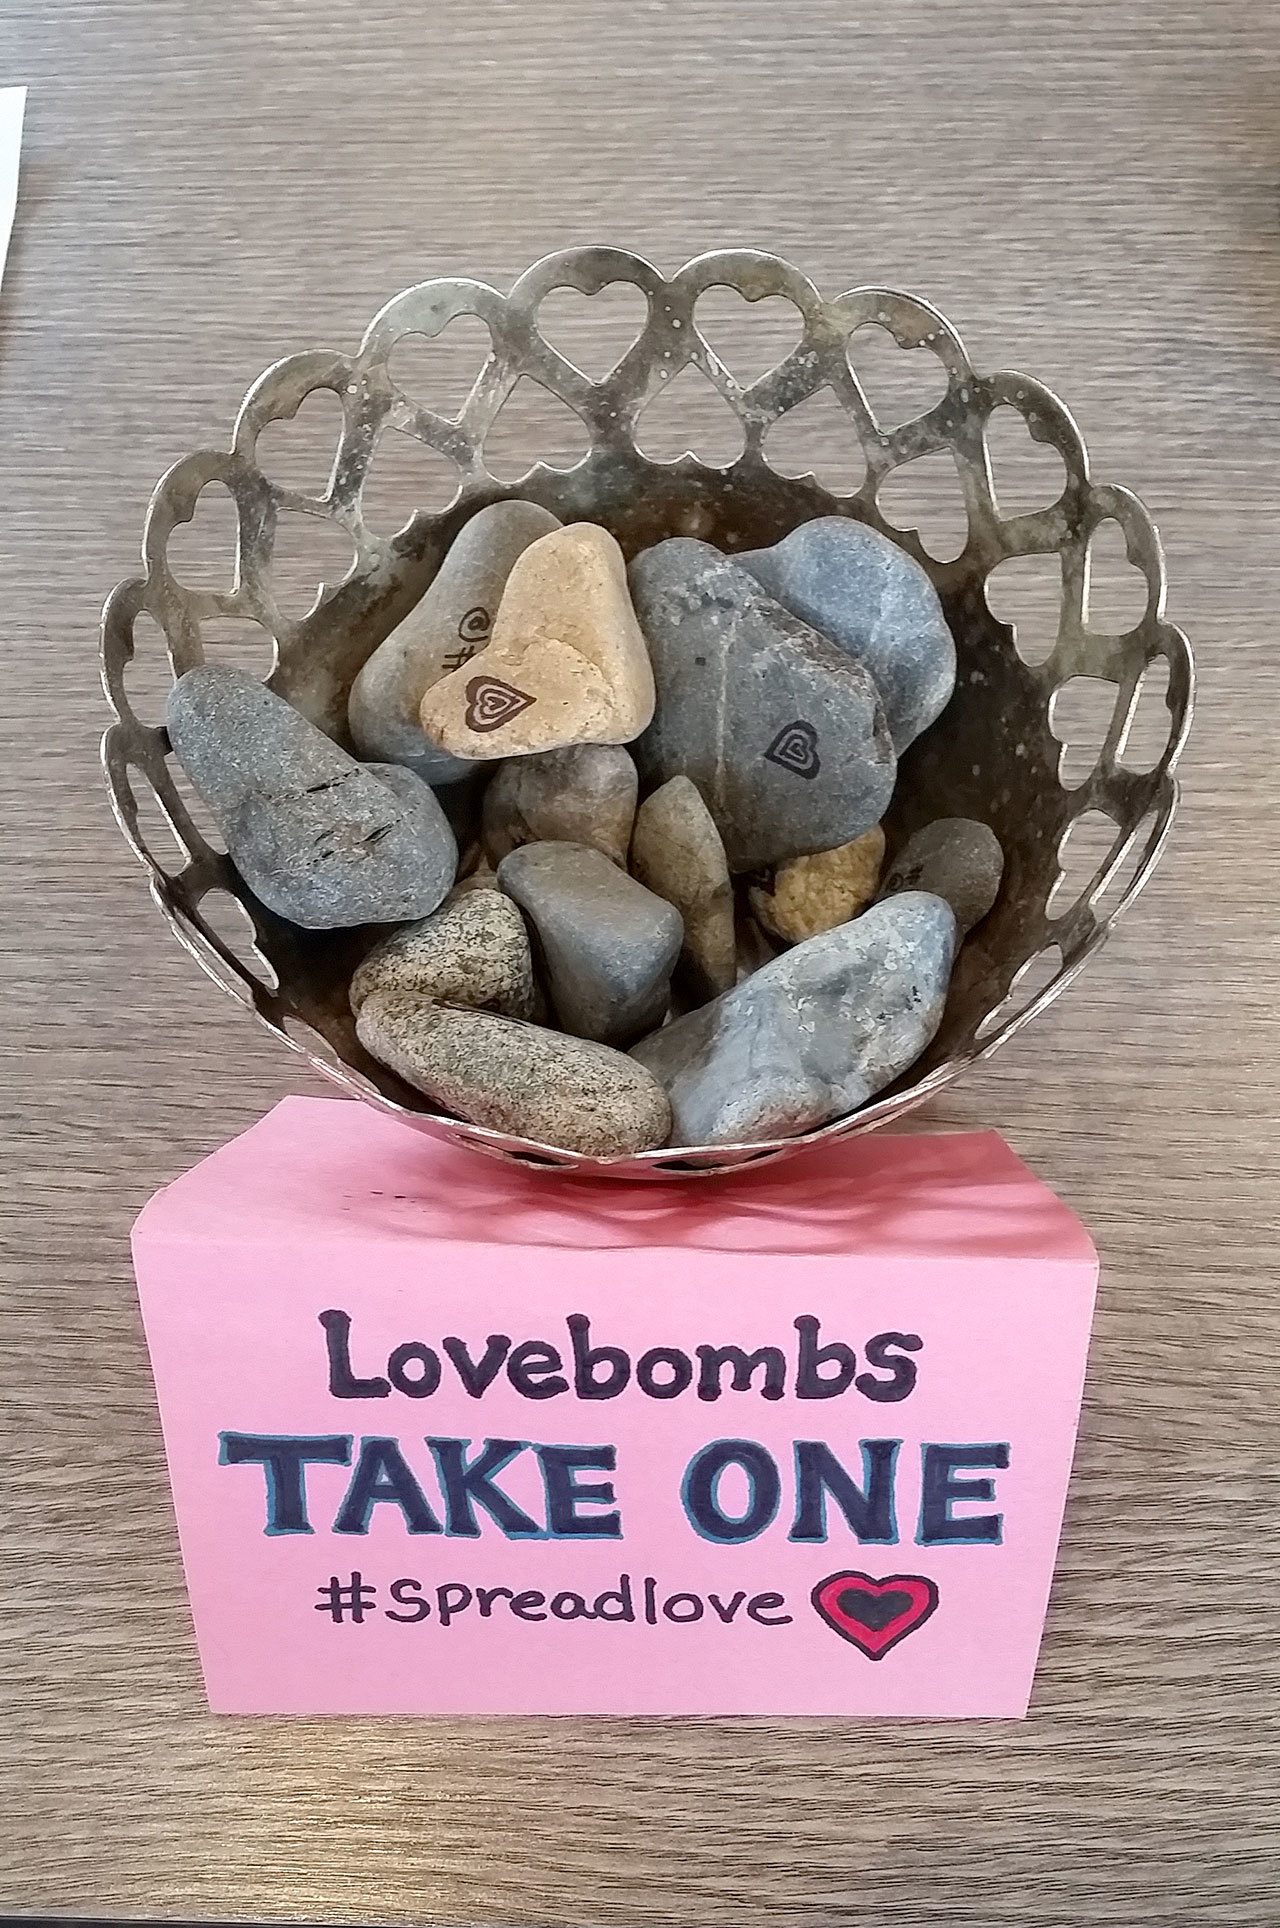 A basket full of Rowan’s heart-shaped rocks for anyone to take and share. (Courtesy Photo)